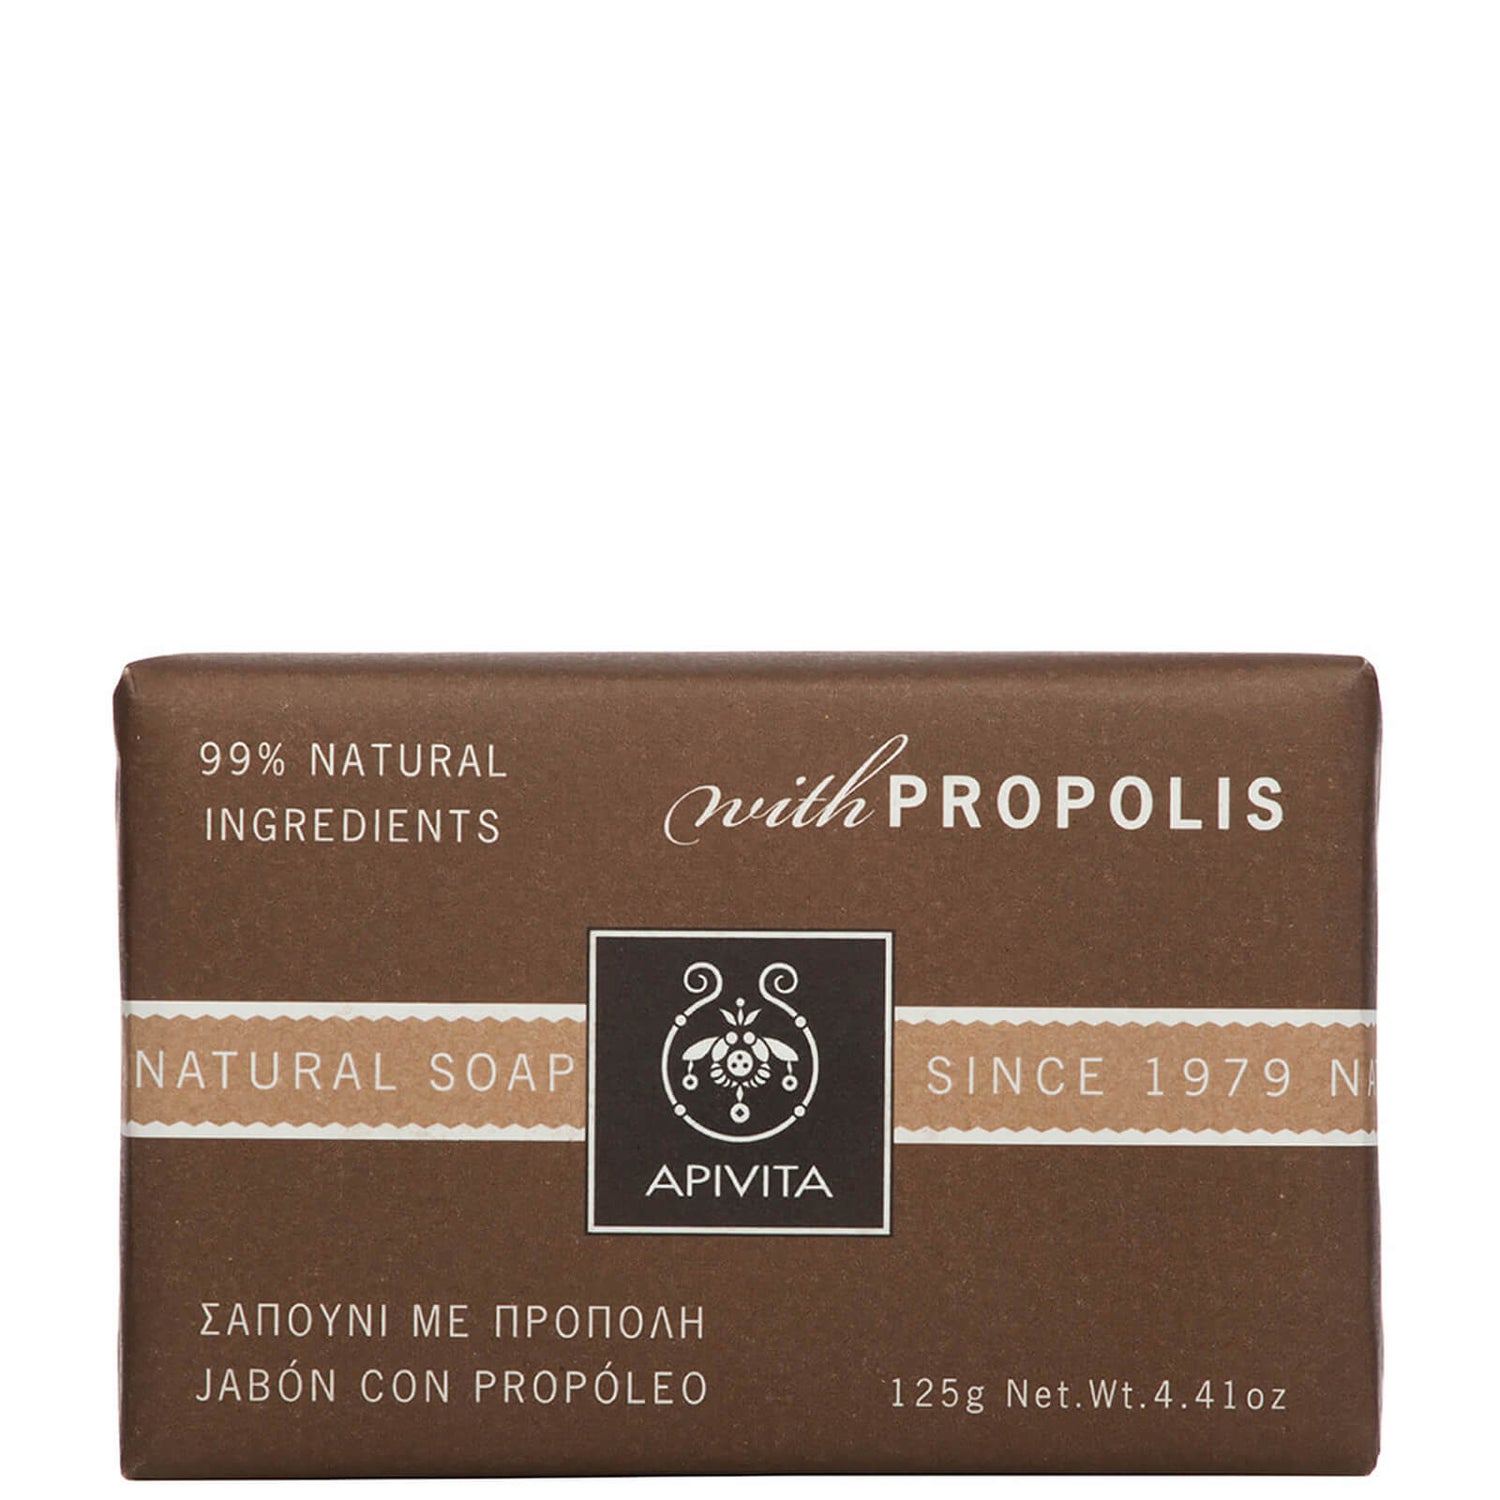 APIVITA Natural Soap - Propolis 125g